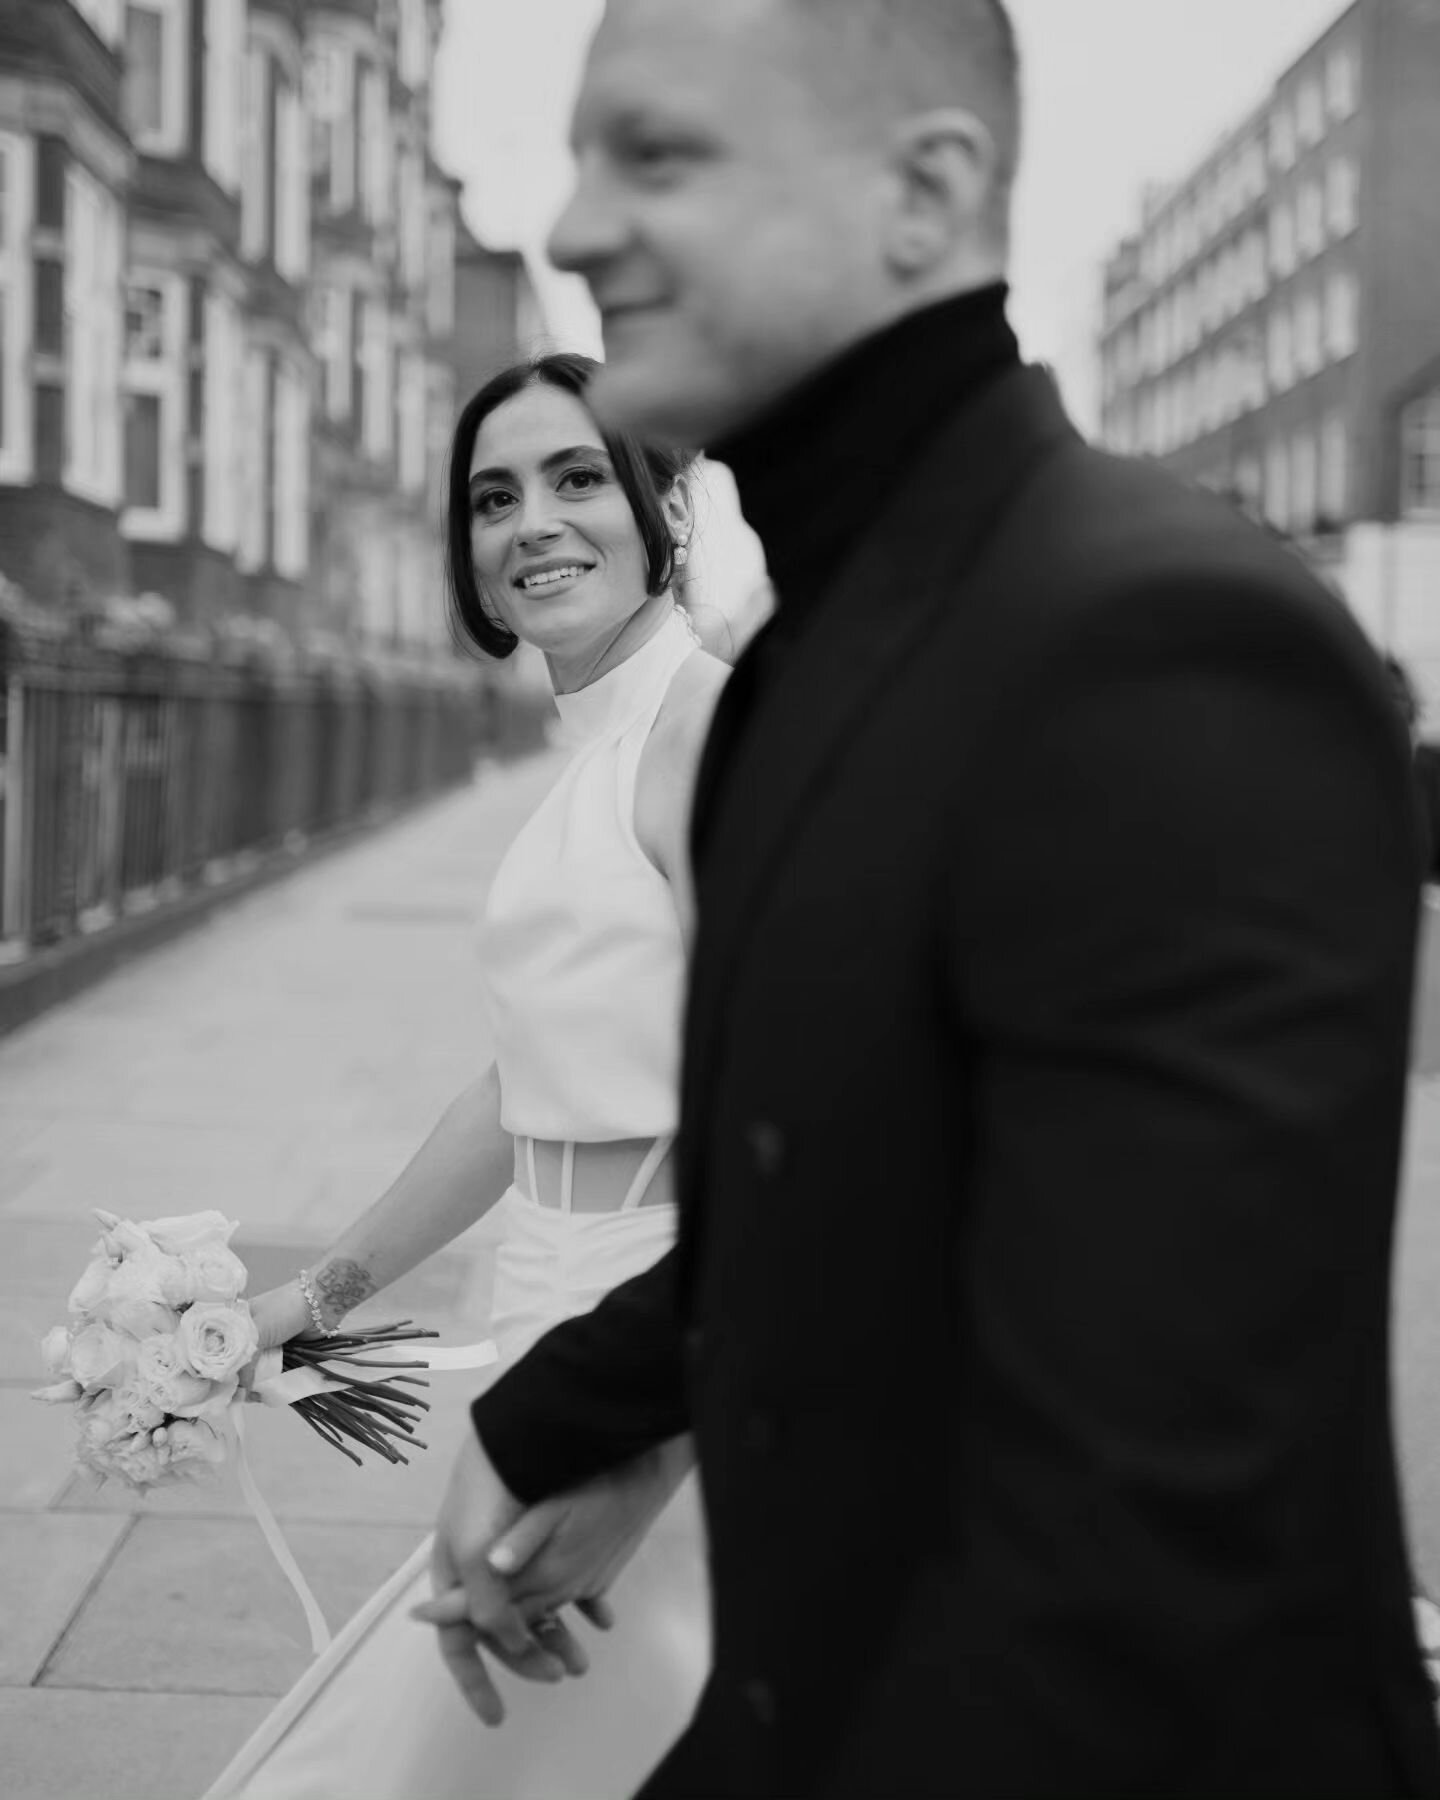 A few of my favourites from beautiful intimate wedding at @adaytorememberlondon 😊

Dress @millanova 
Flowers @reine.des.fleurs.x 
Mua @bybeaumua 

#londonwedding #citywedding #intimatewedding #oldmerylebonetownhallwedding